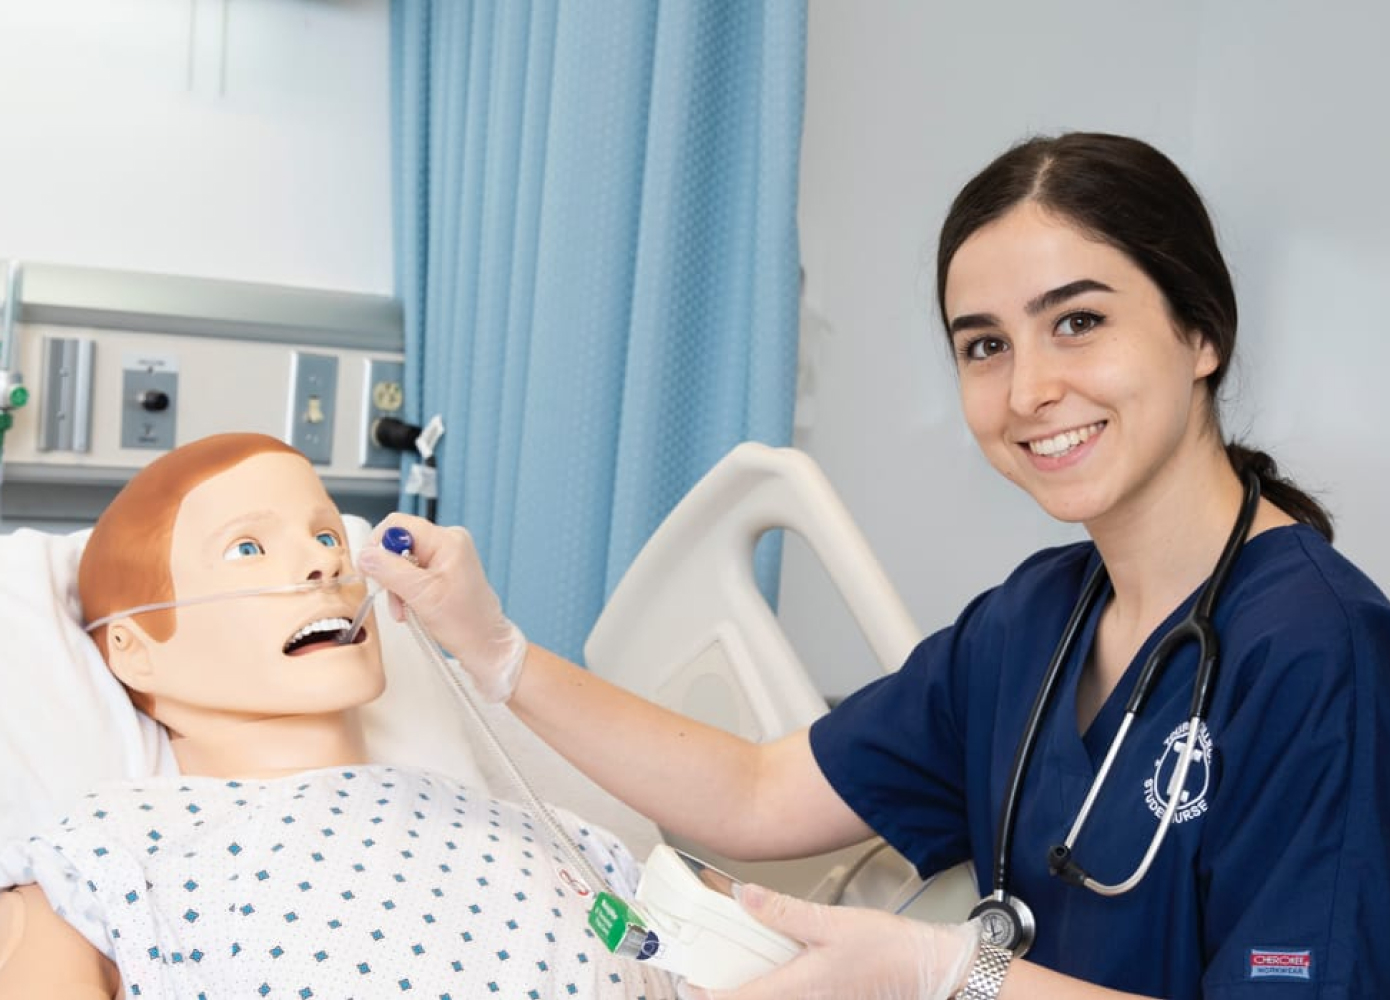 Nursing student smiling while learning using medical manikin in lab